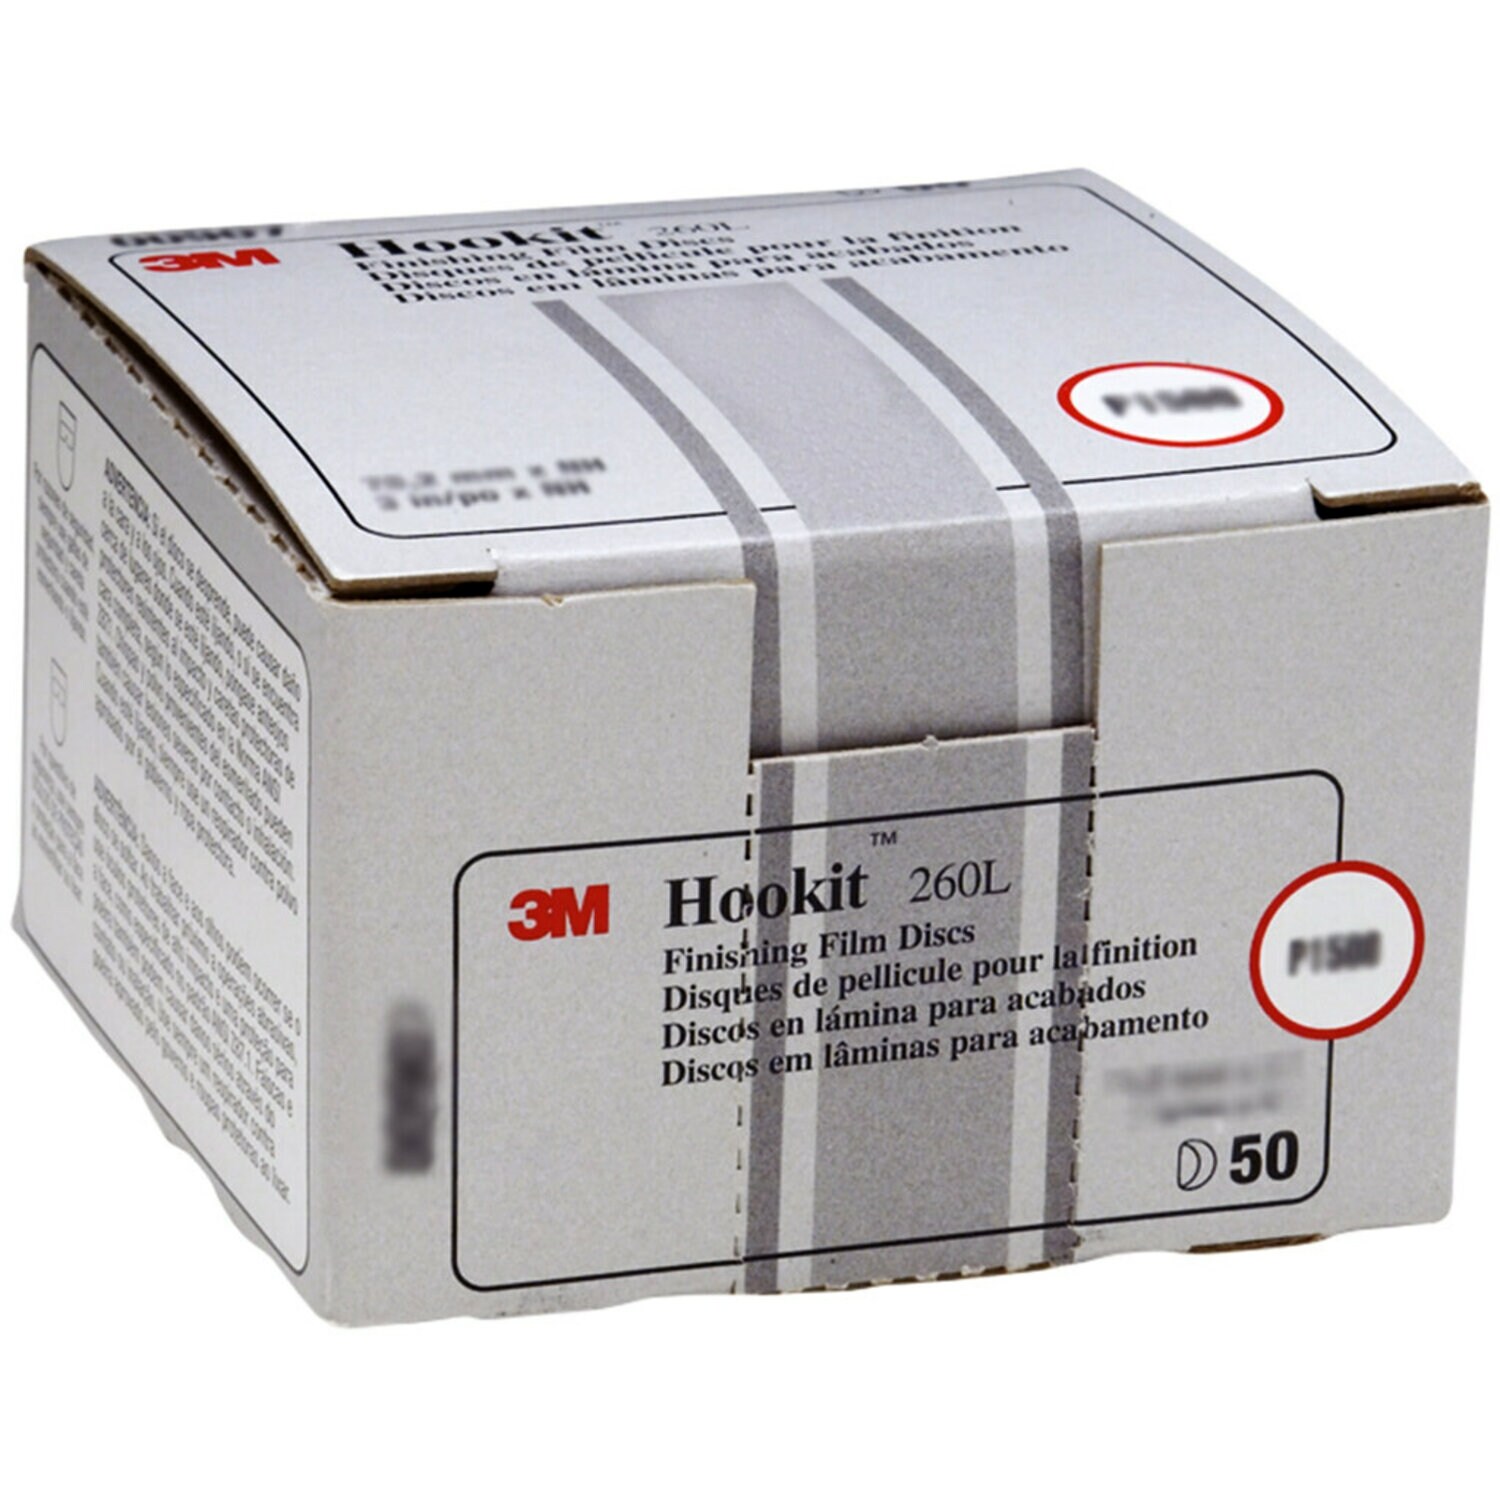 7000120386 - 3M Hookit Finishing Film Abrasive Disc 260L, 00910, 3 in, P800, 50
discs per carton, 4 cartons per case